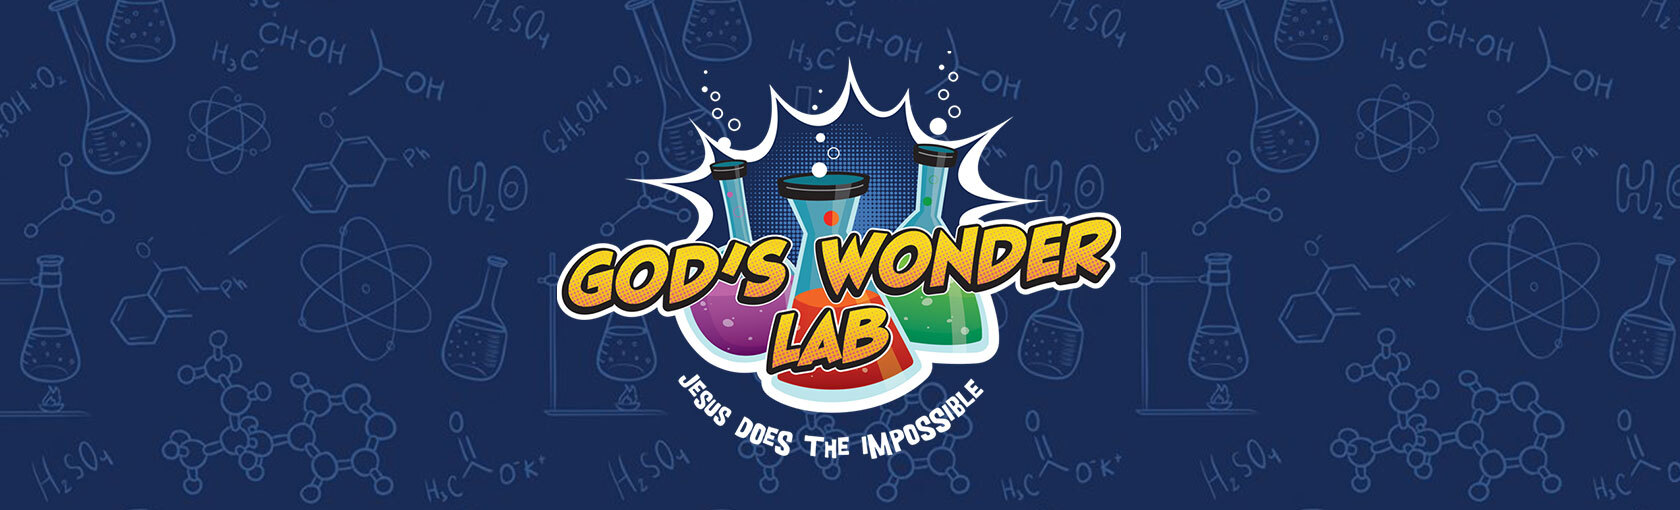 God's Wonder Lab